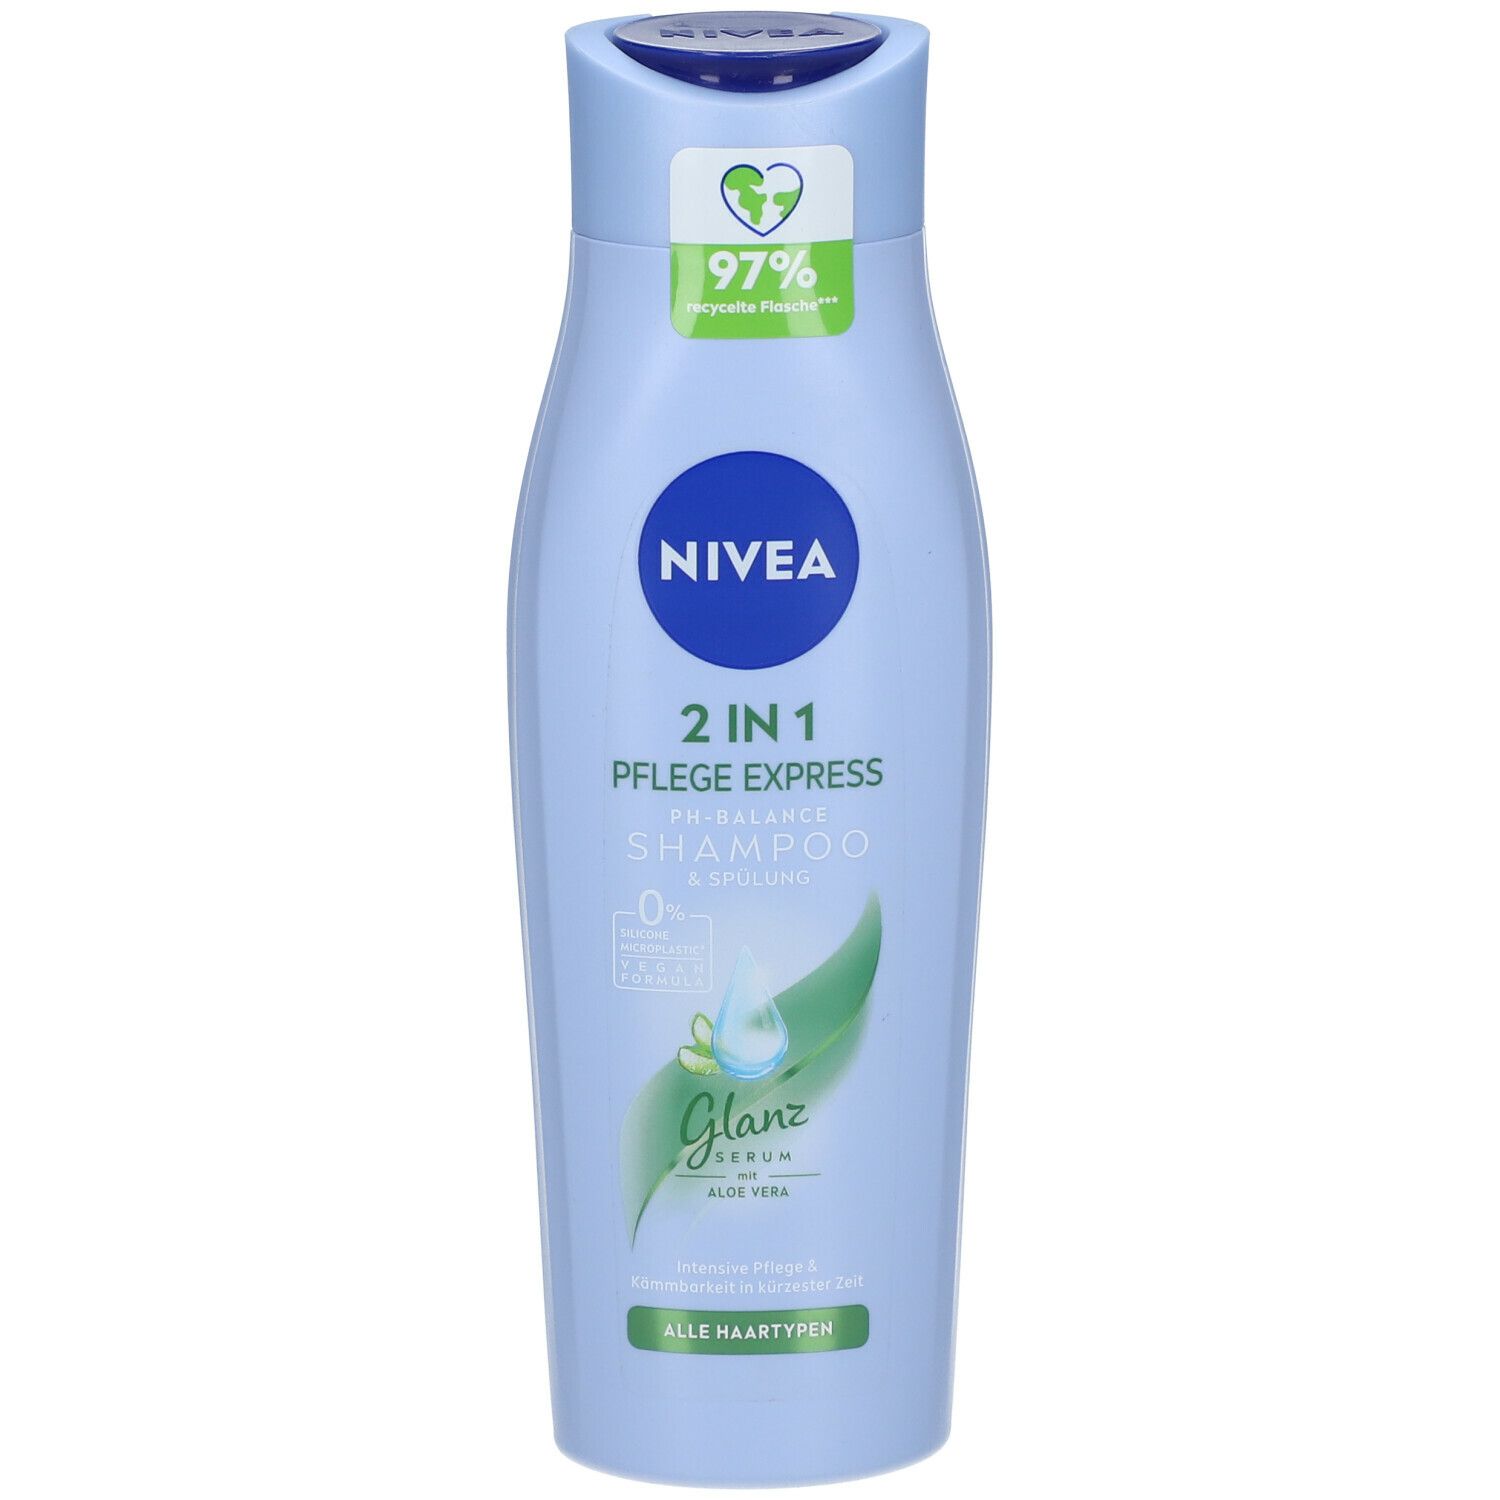 NIVEA® 2IN1 Pflege Express Shampoo & Spülung